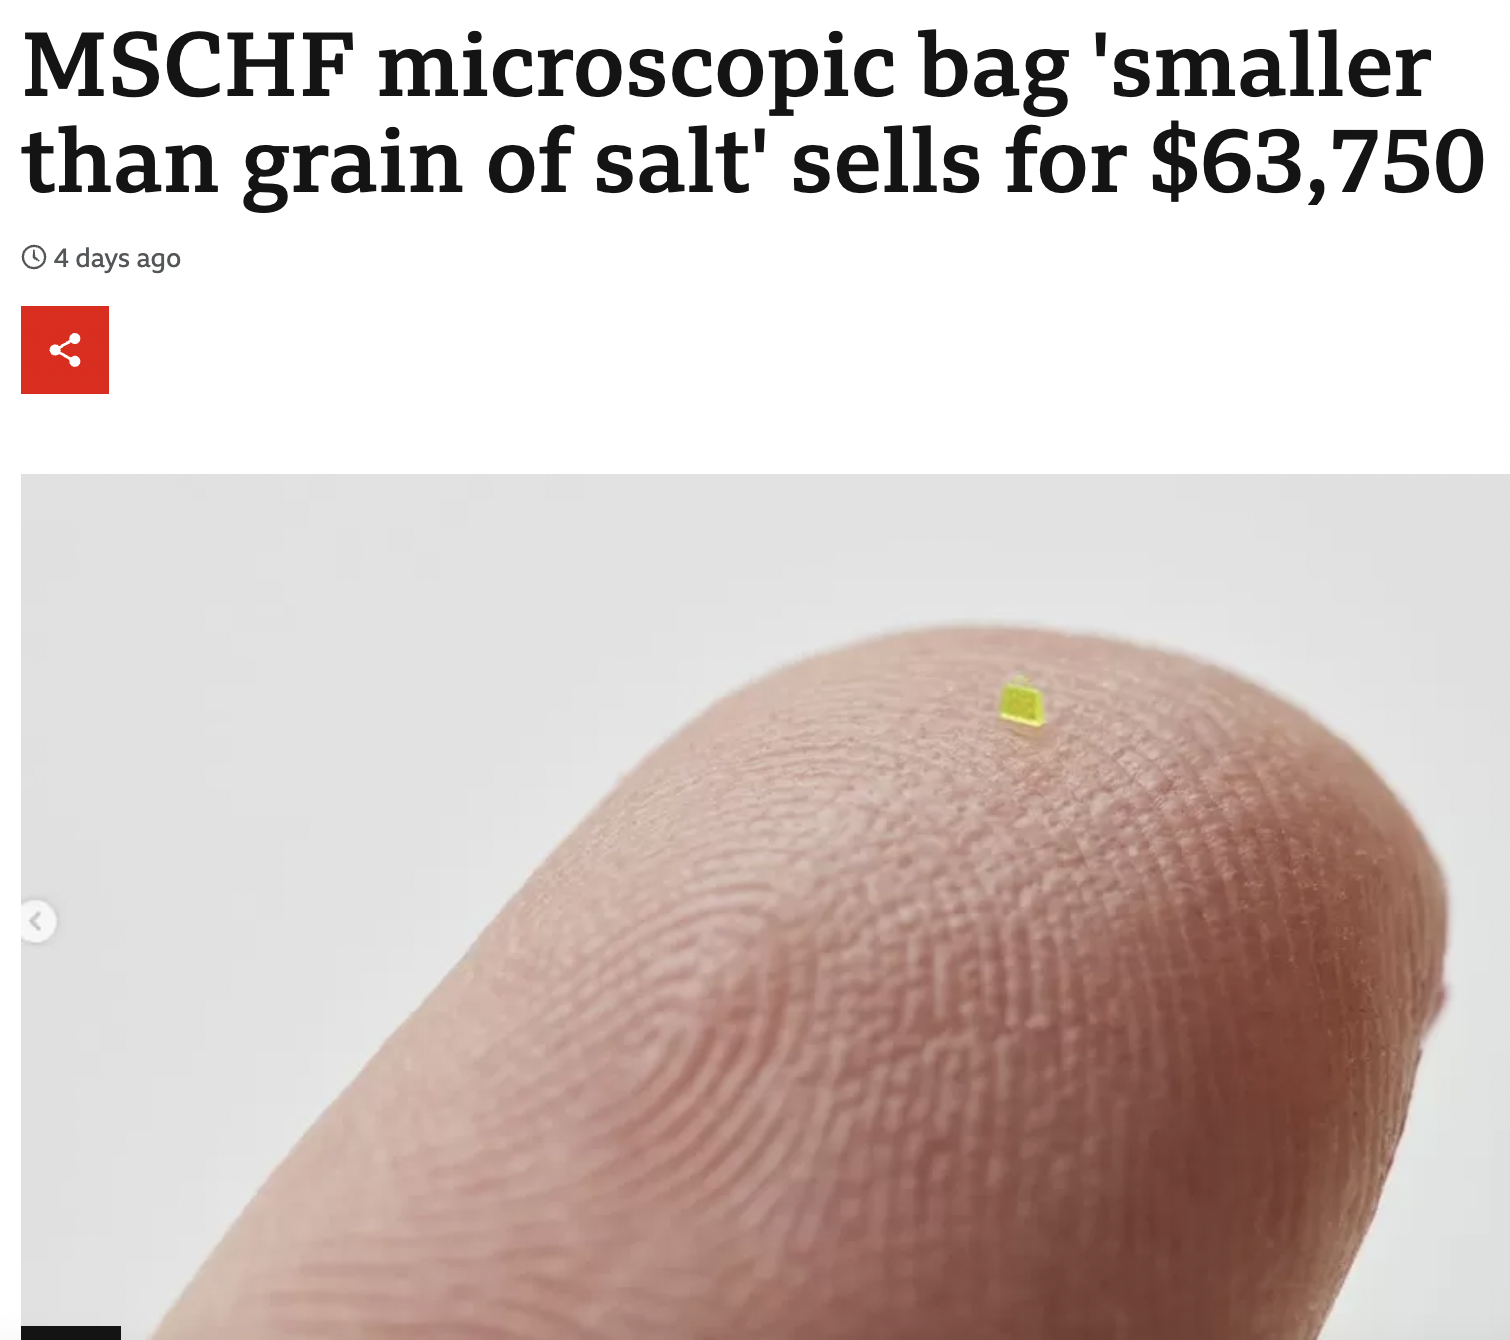 MSCHF microscopic bag 'smaller than grain of salt' sells for $63,750 - BBC  News